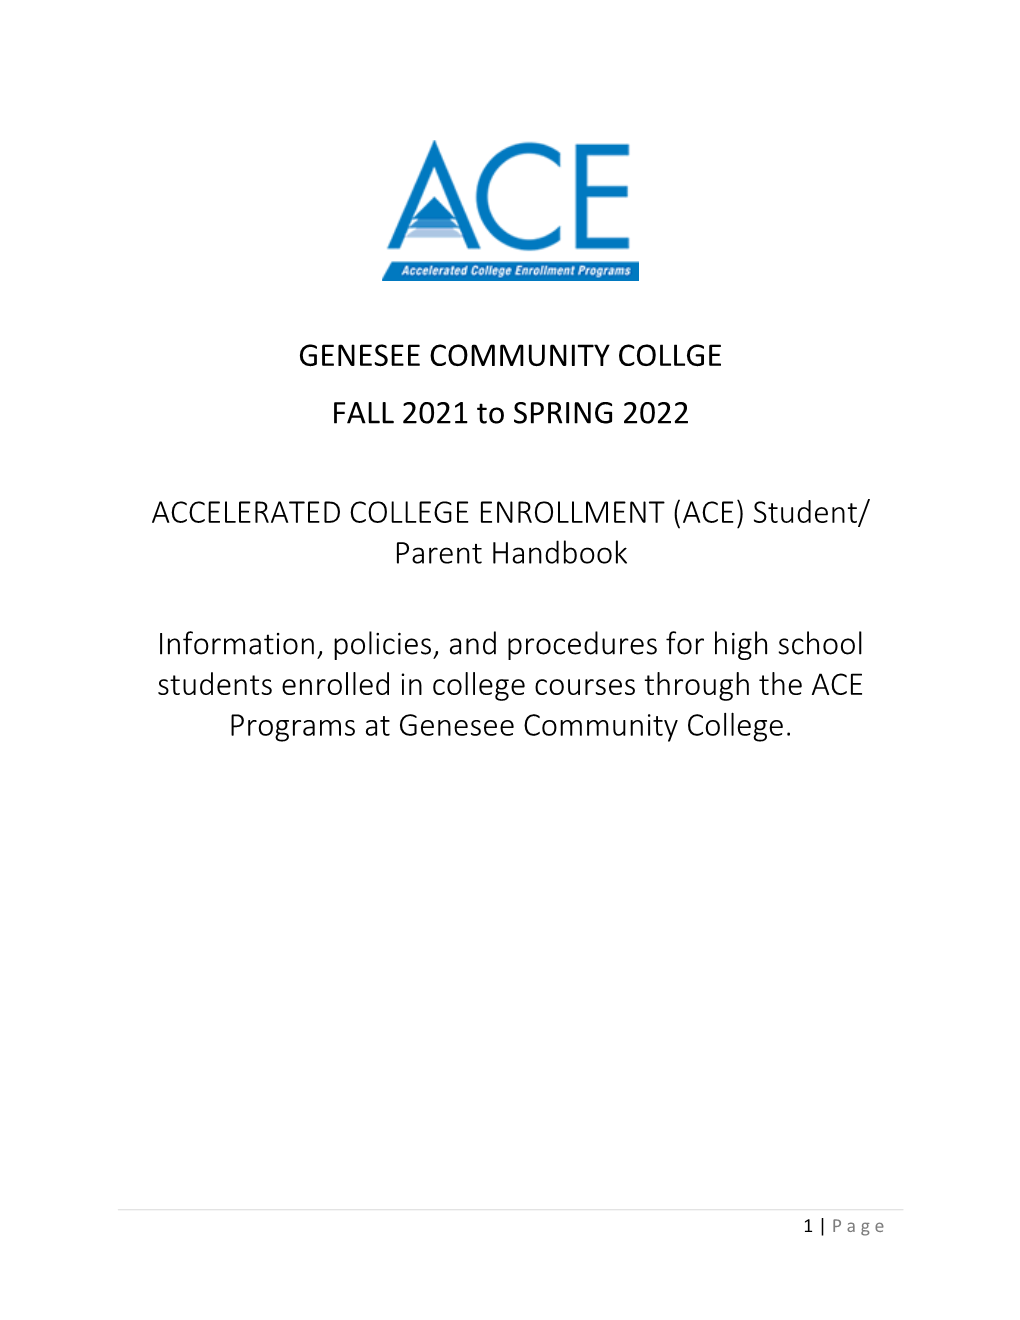 ACE Programs Student Handbook